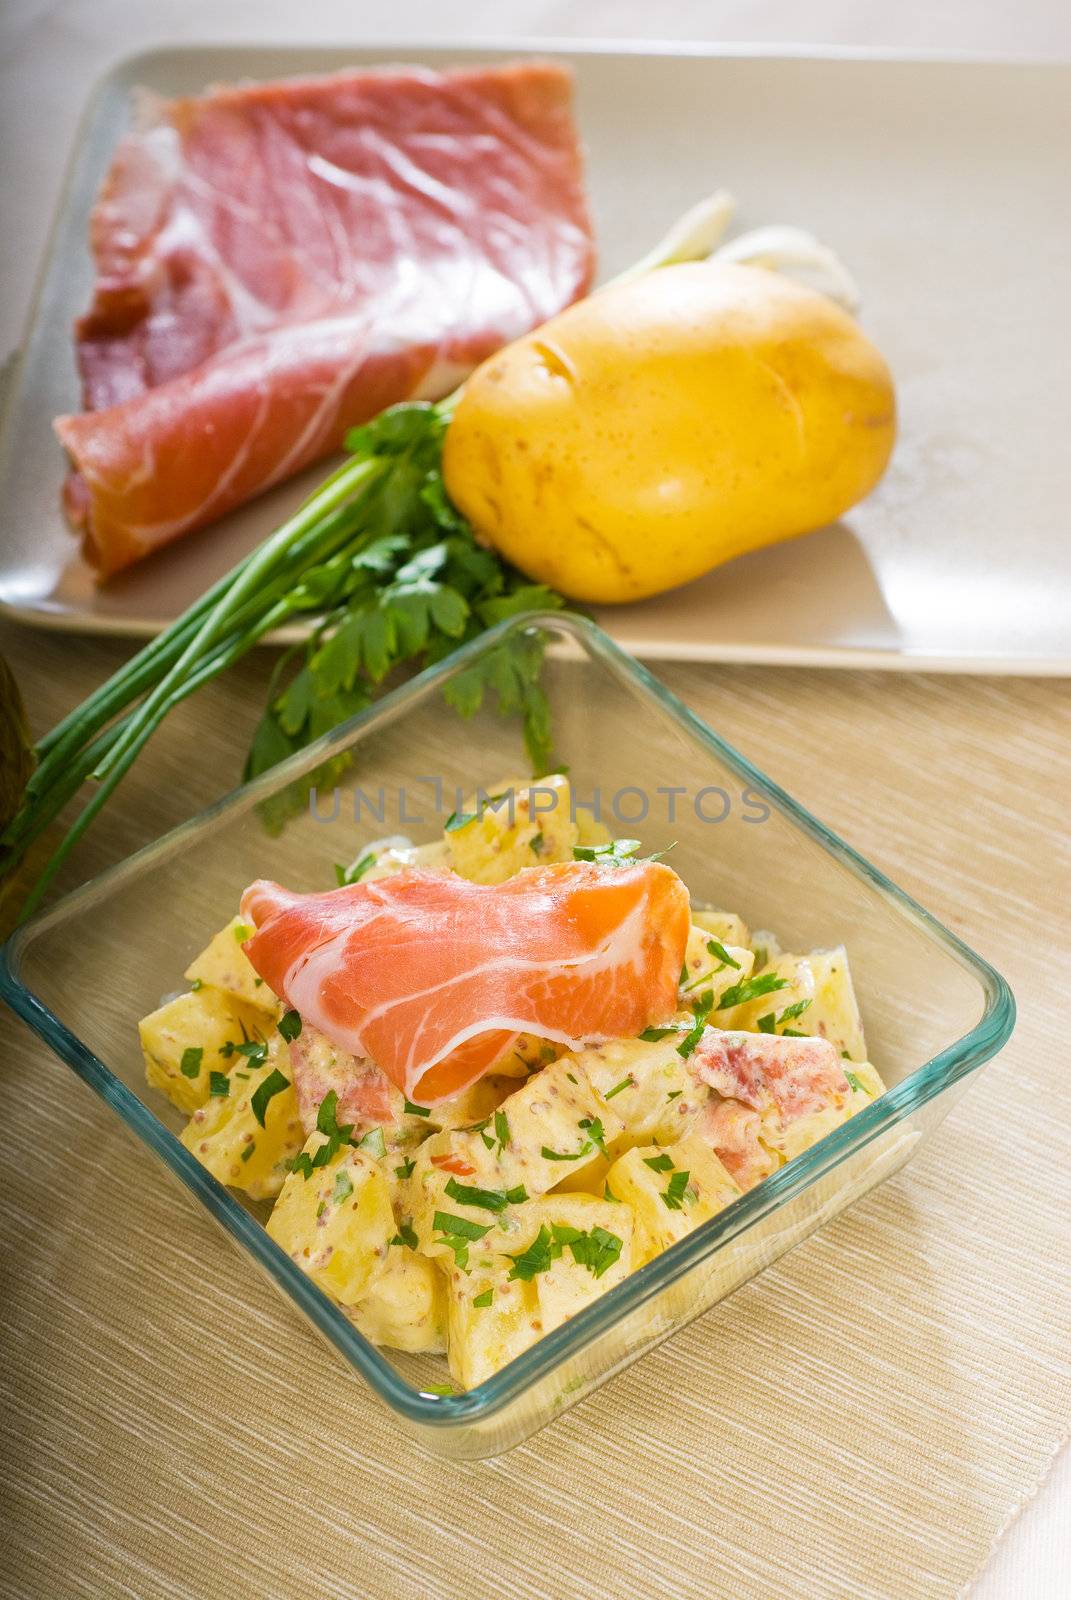 parma ham and potato salad by keko64